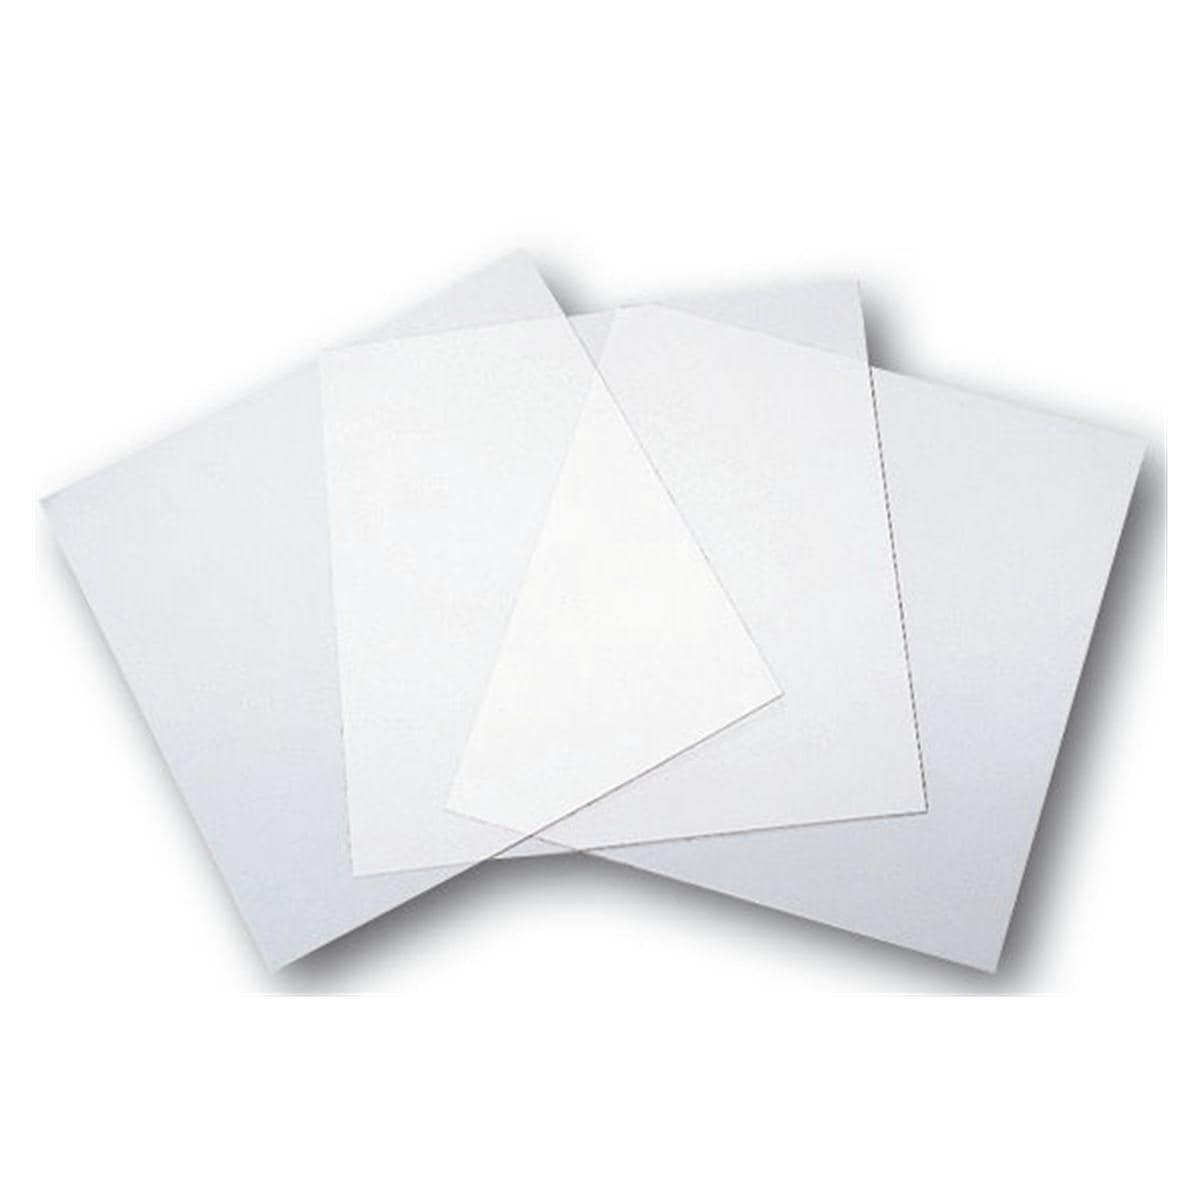 Sof-Tray Sheets - medium 1,5 mm paisseur, 20 pcs, #227